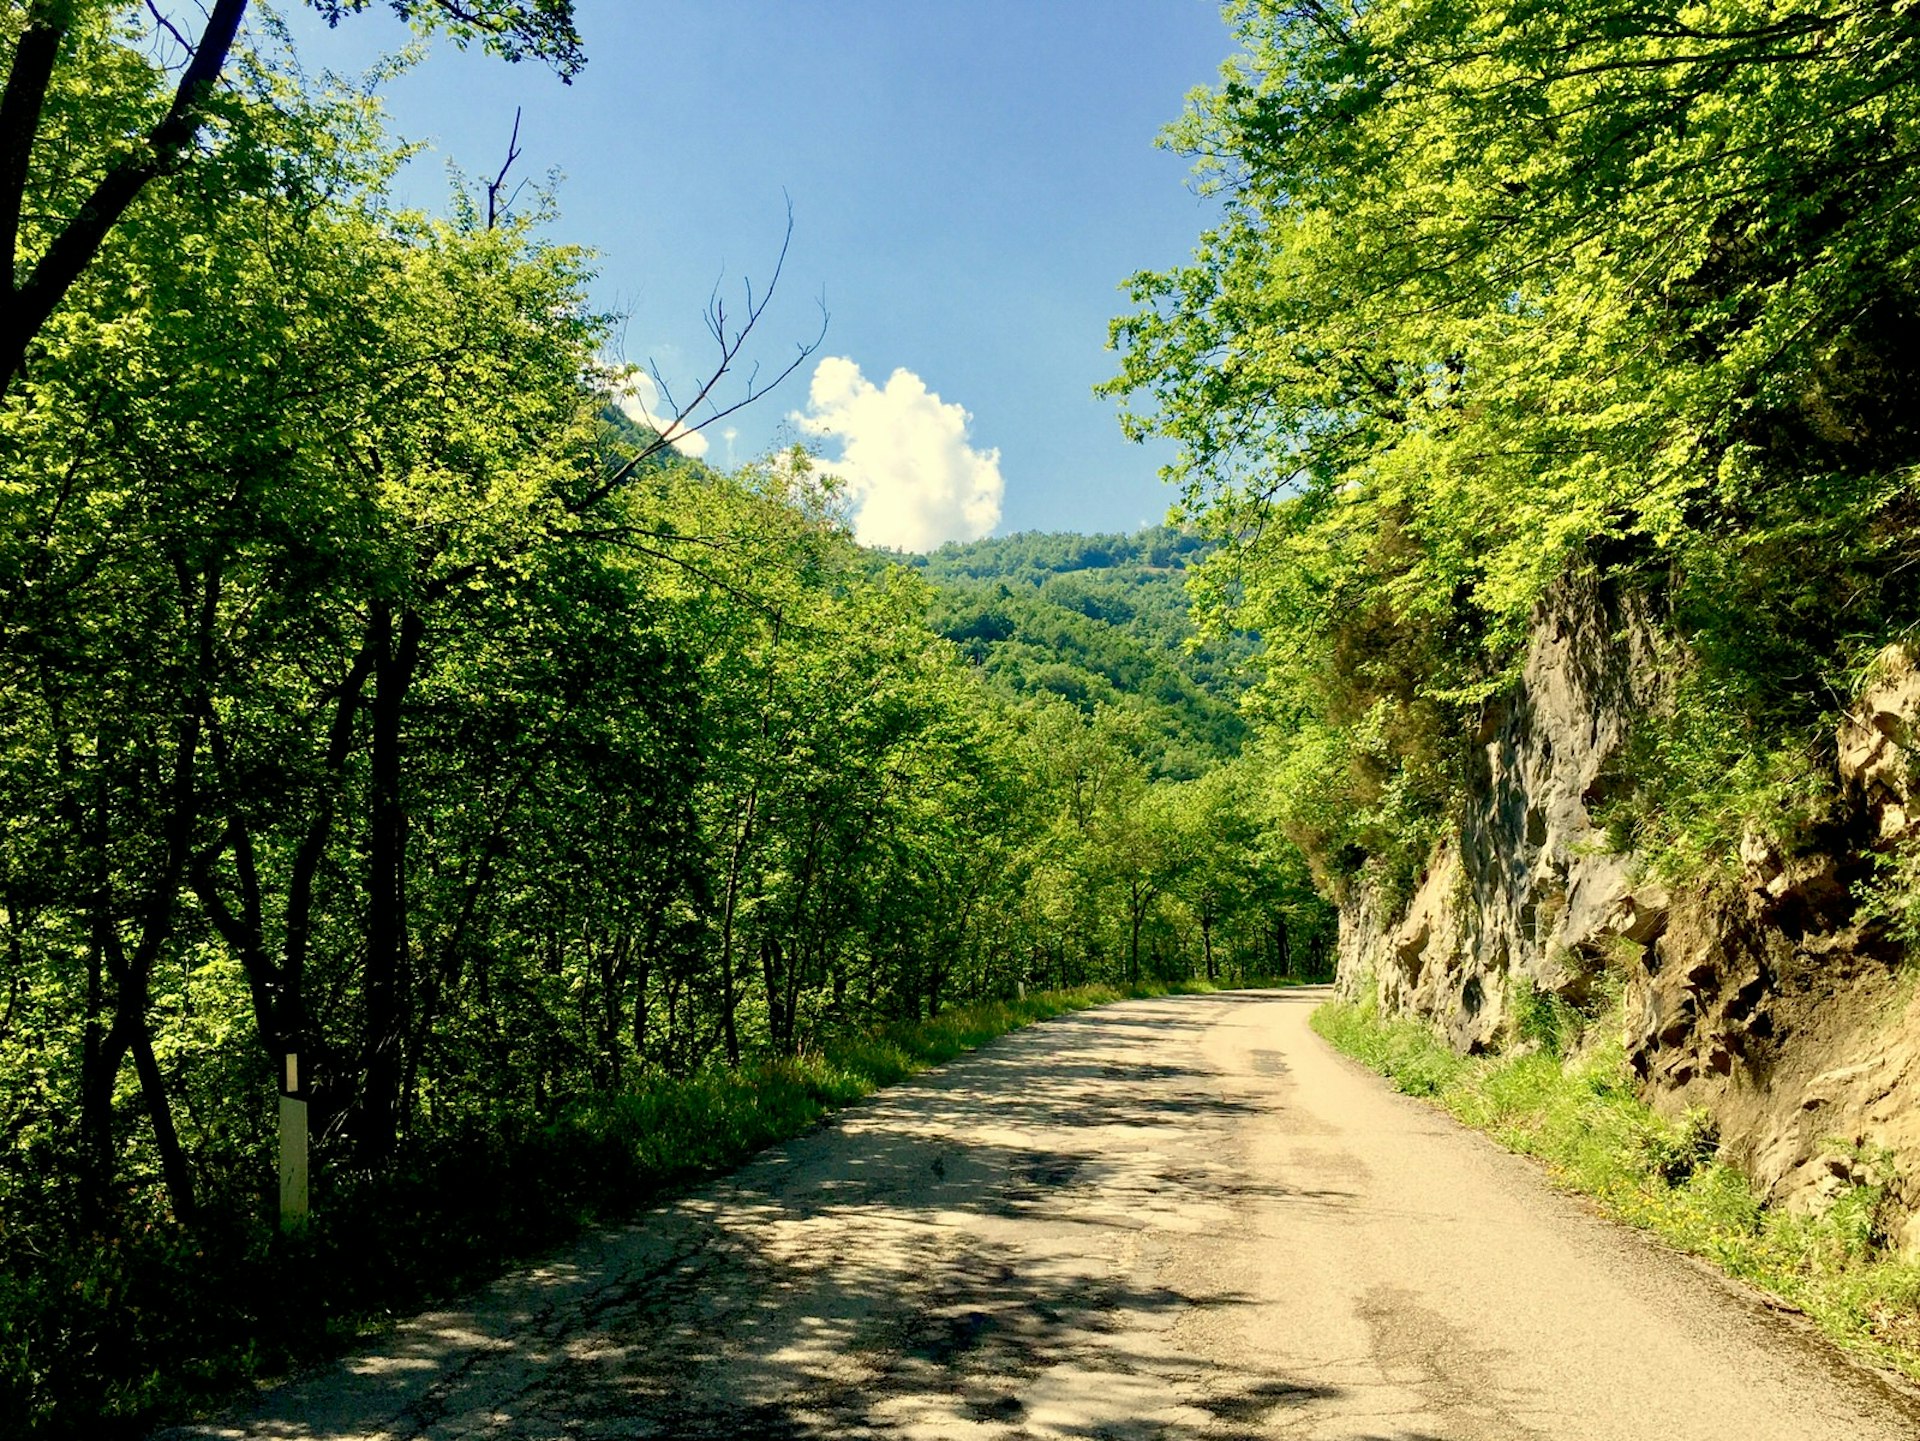 Picturesque road in the Monti Sibilini